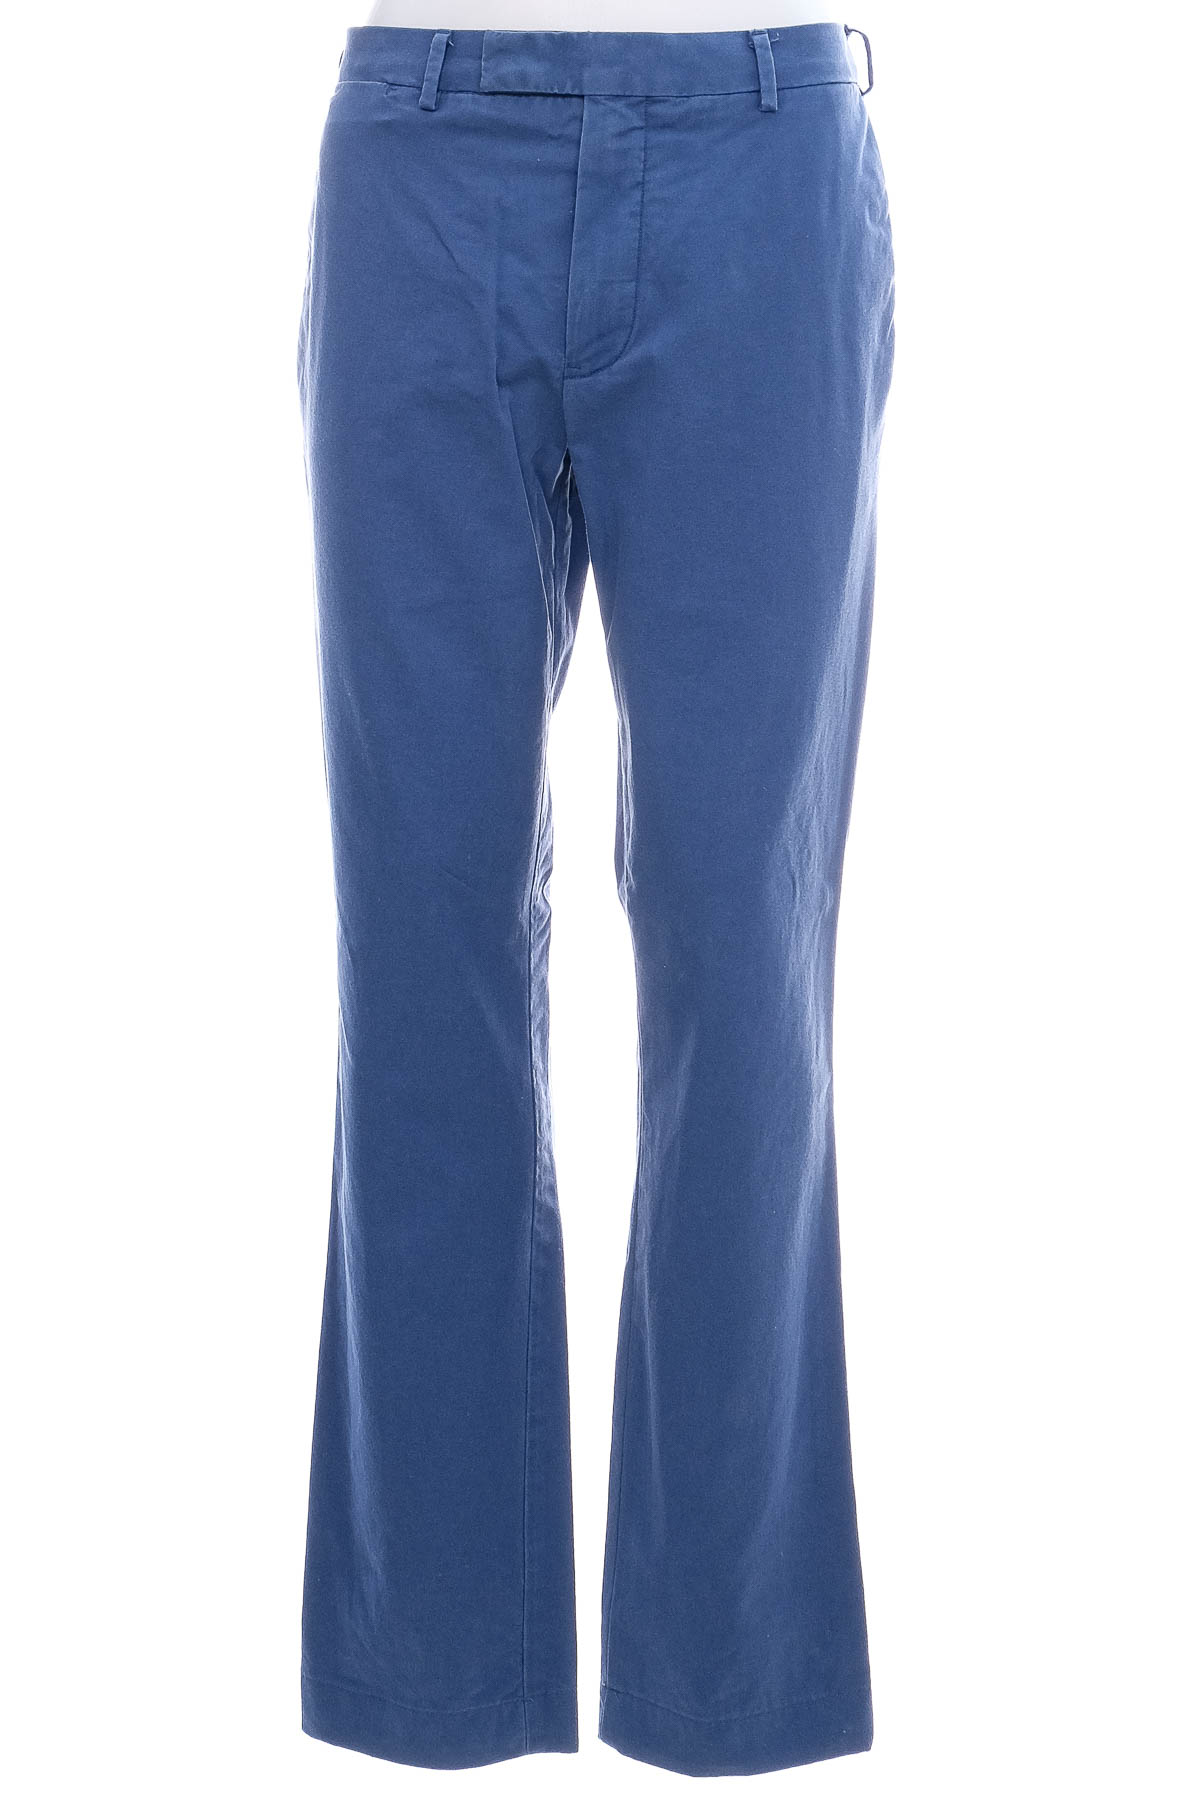 Pantalon pentru bărbați - POLO RALPH LAUREN - 0